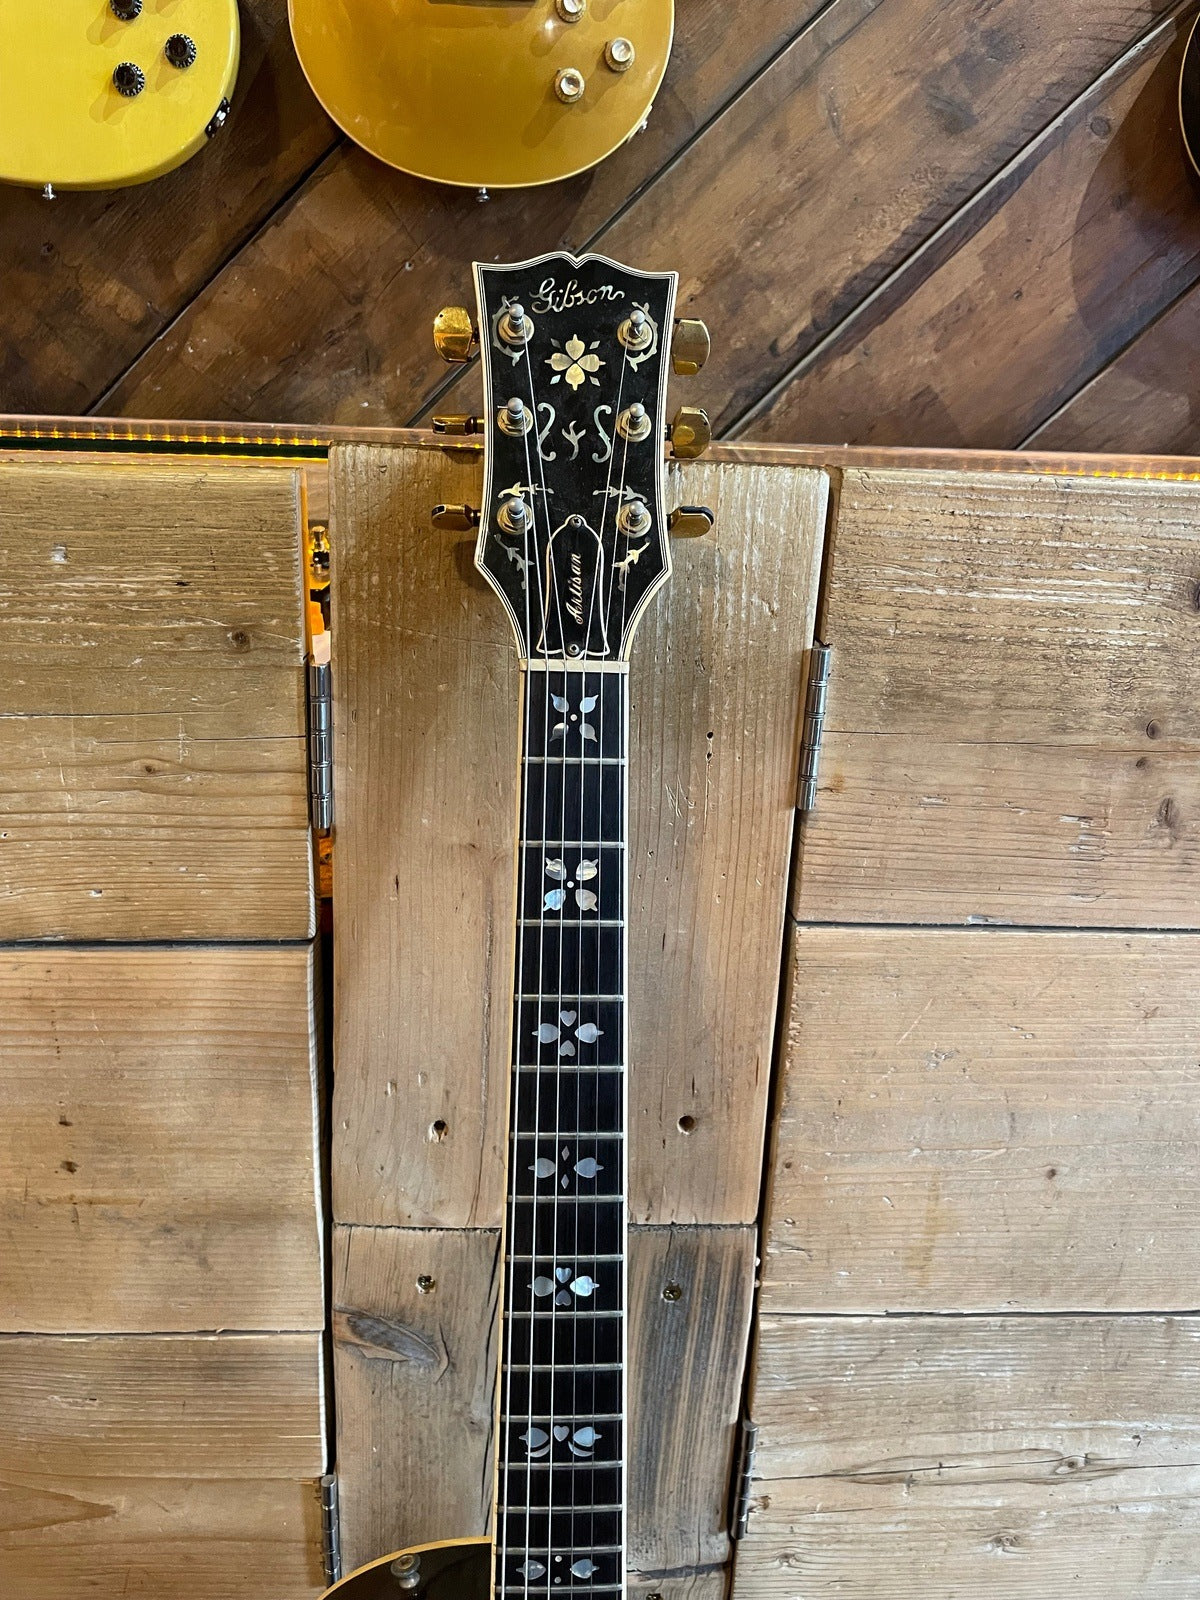 1977 Gibson Les Paul Artisan, Walnut